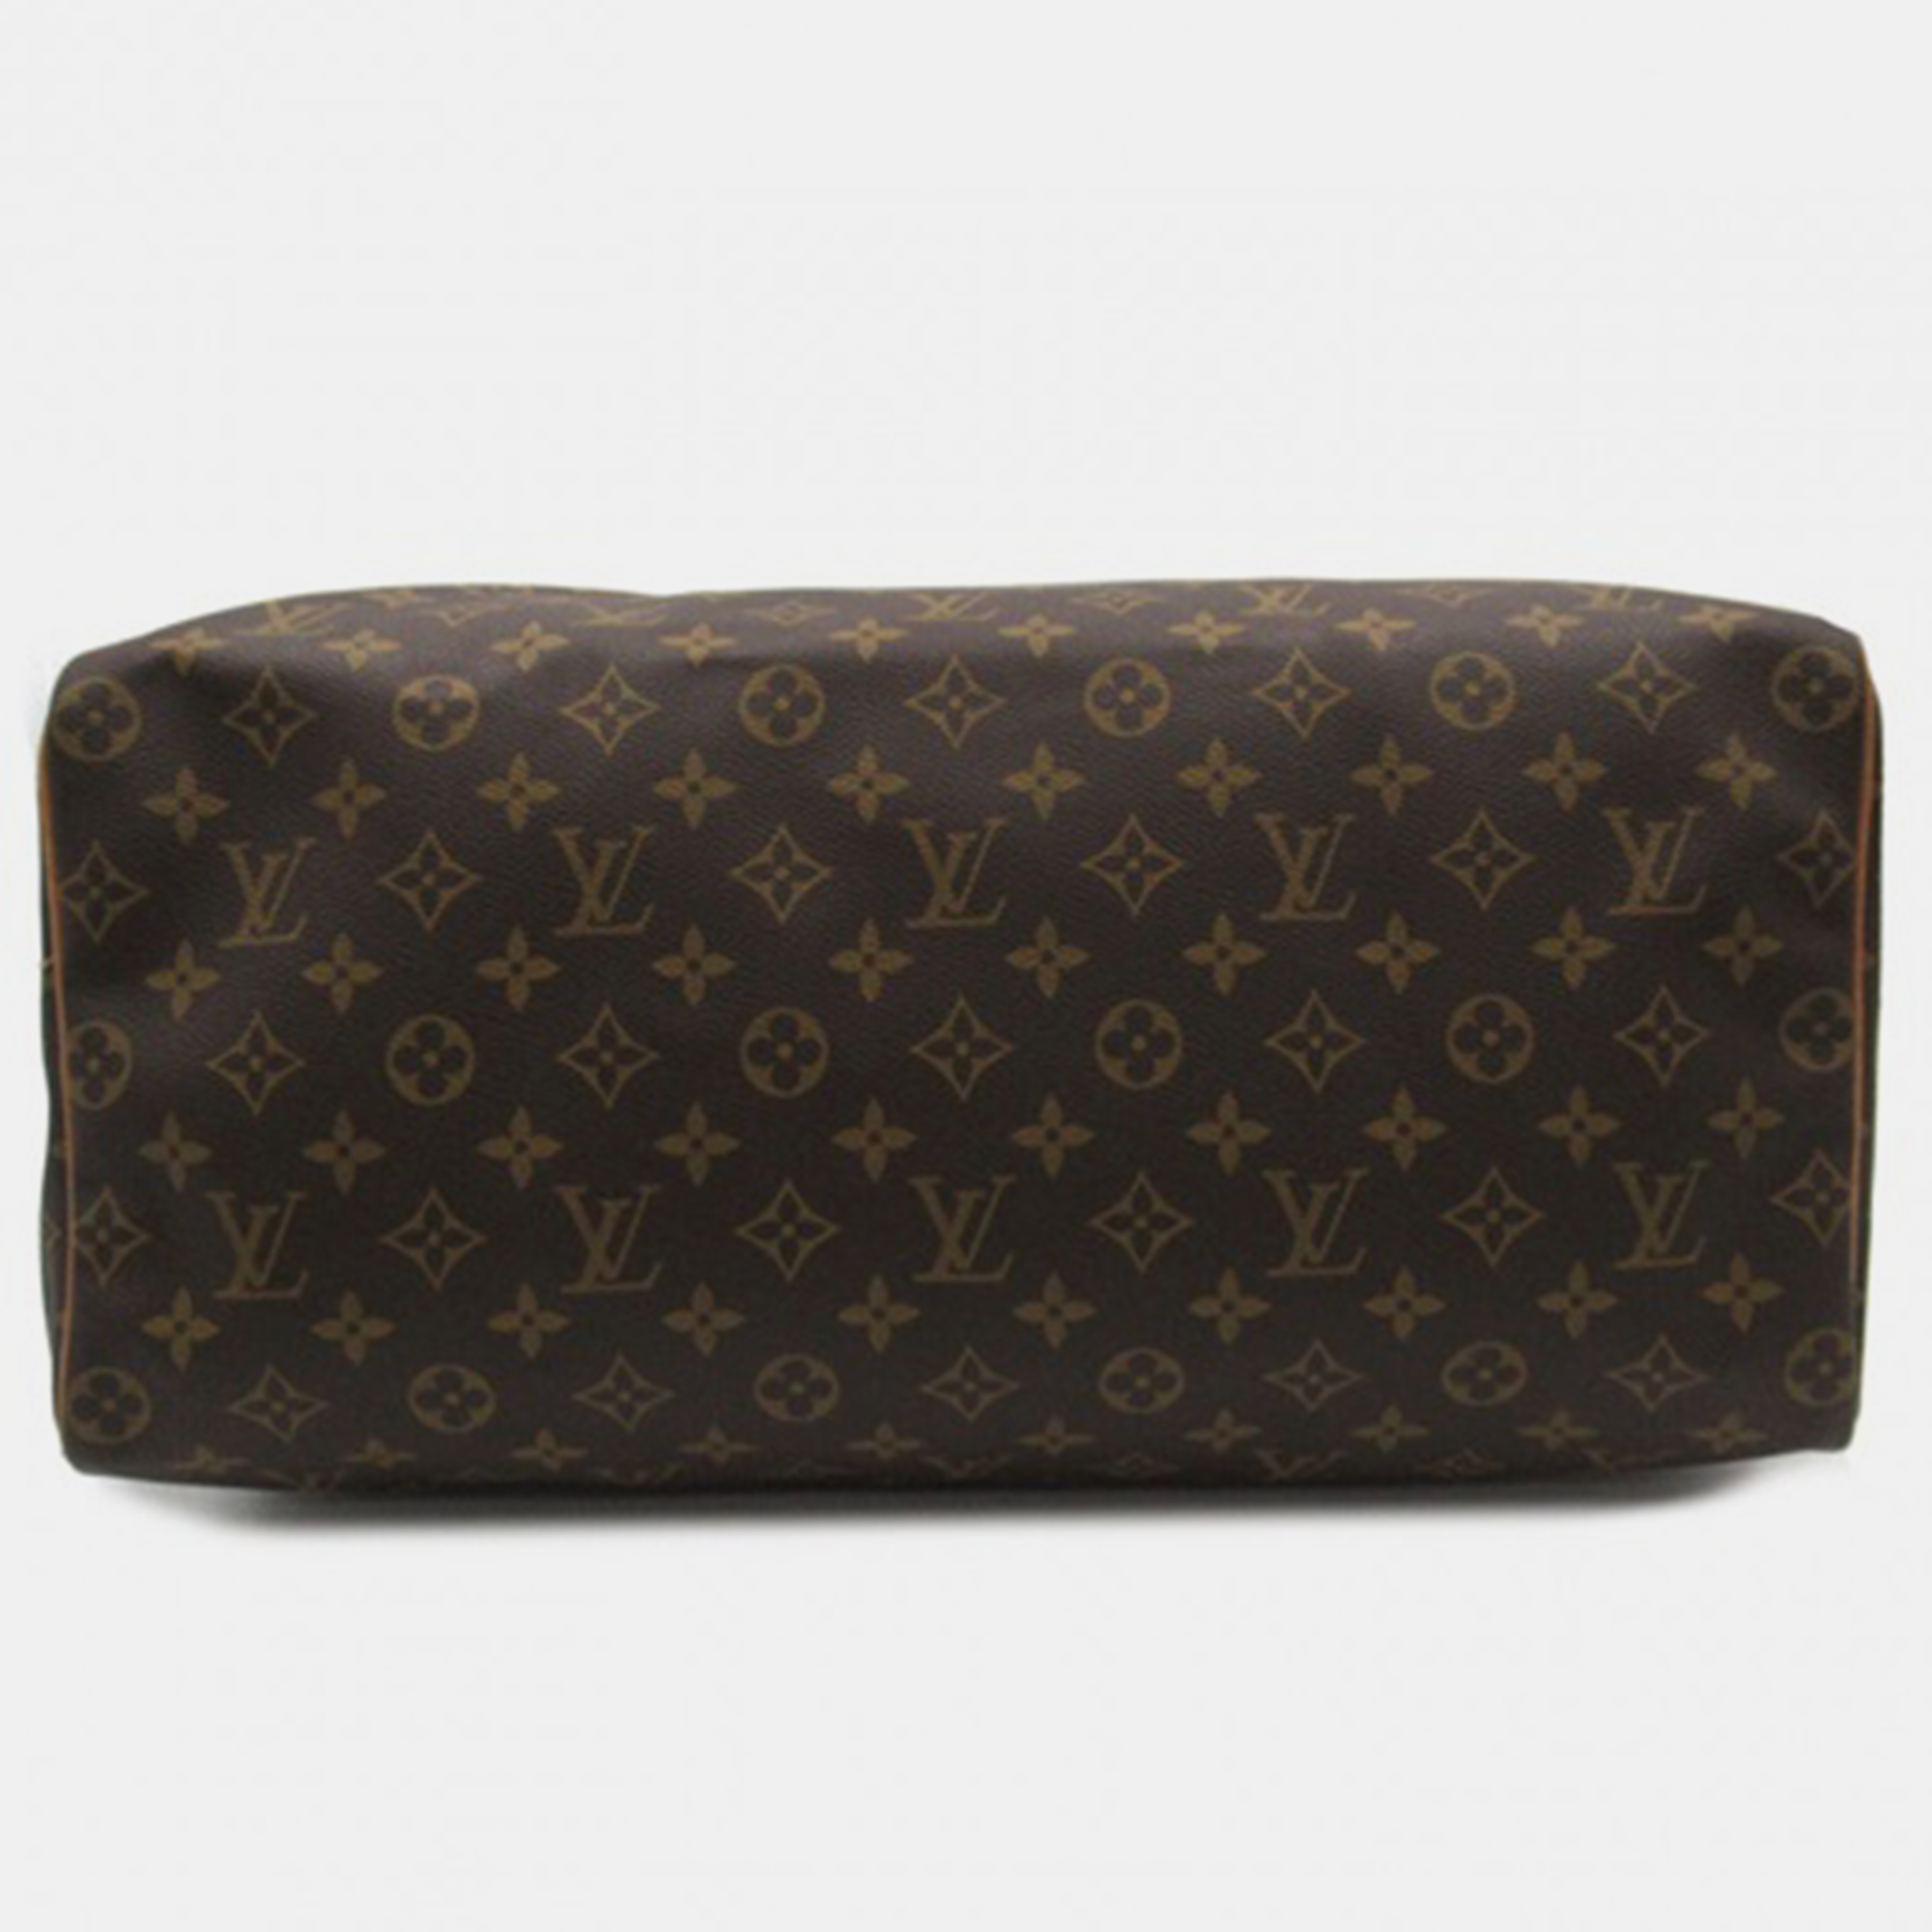 Louis Vuitton Brown Monogram Canvas Speedy 40 Top Handle Bag